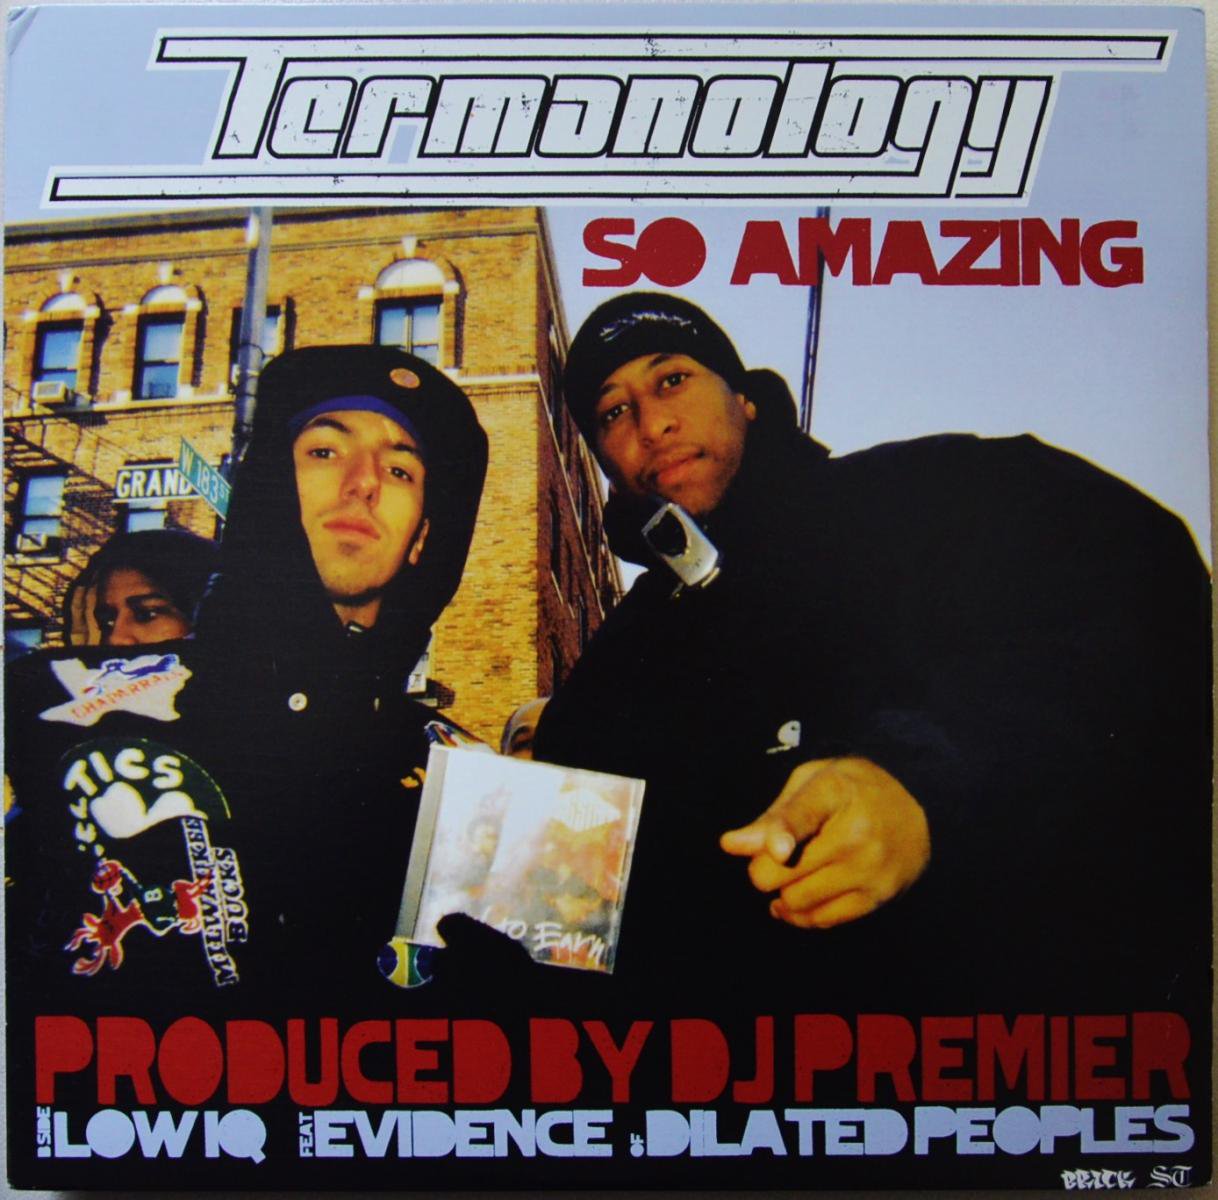 TERMANOLOGY / SO AMAZING (PROD BY.DJ PREMIER) / LOW IQ (PROD BY.EVIDENCE) (12